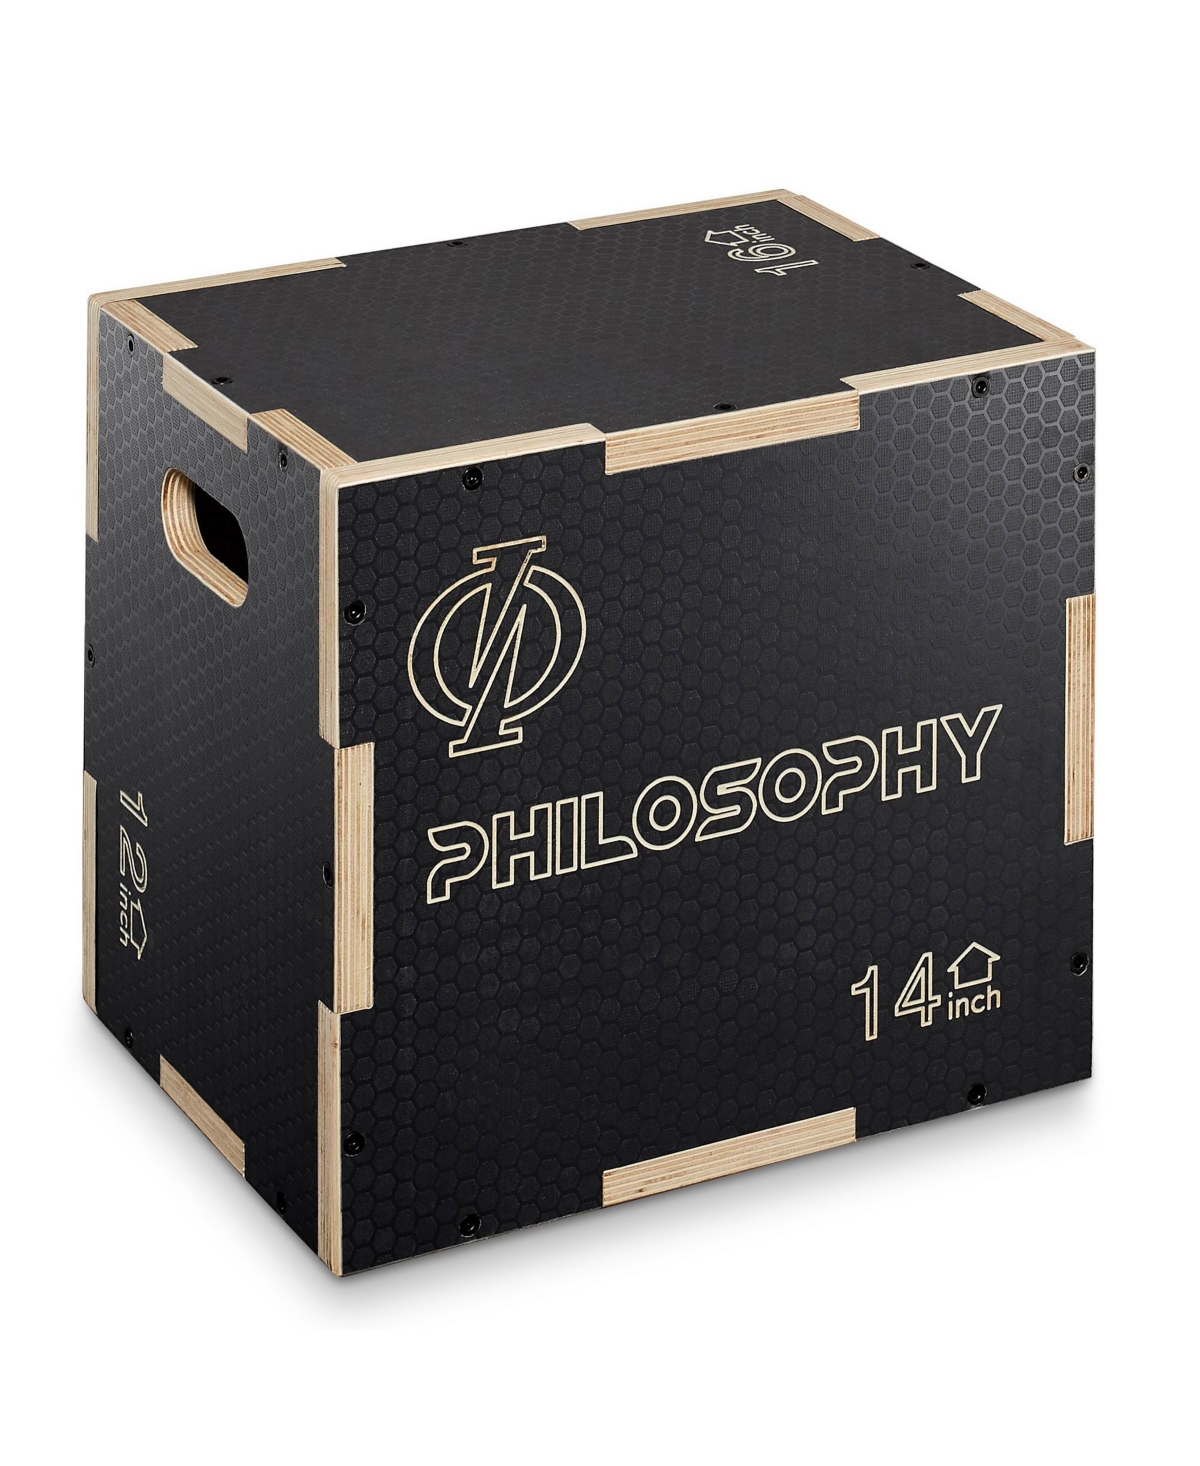 3 in 1 Non-Slip Wood Plyo Box, 16" x 14" x 12", Black, Jump Plyometric Box for Training and Conditioning - Black